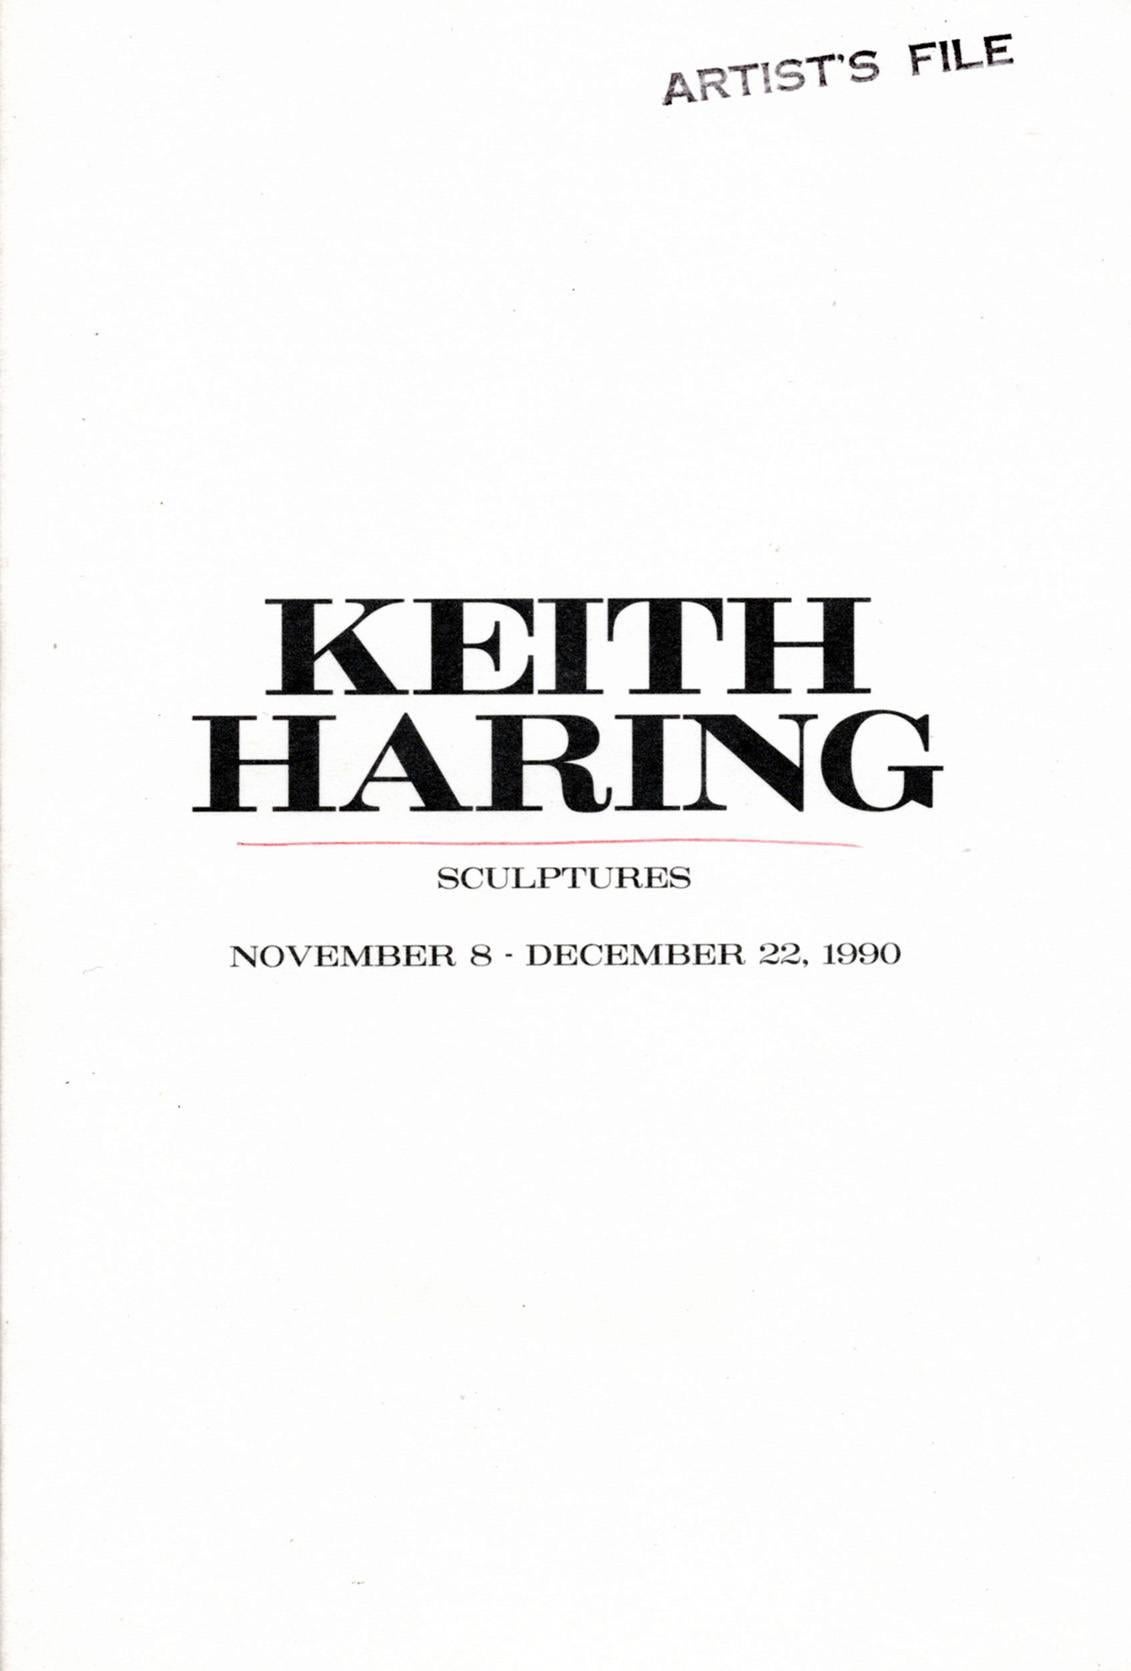 Keith Haring at Tony Shafrazi Gallery (set of 3 vintage Haring collectibles)  3